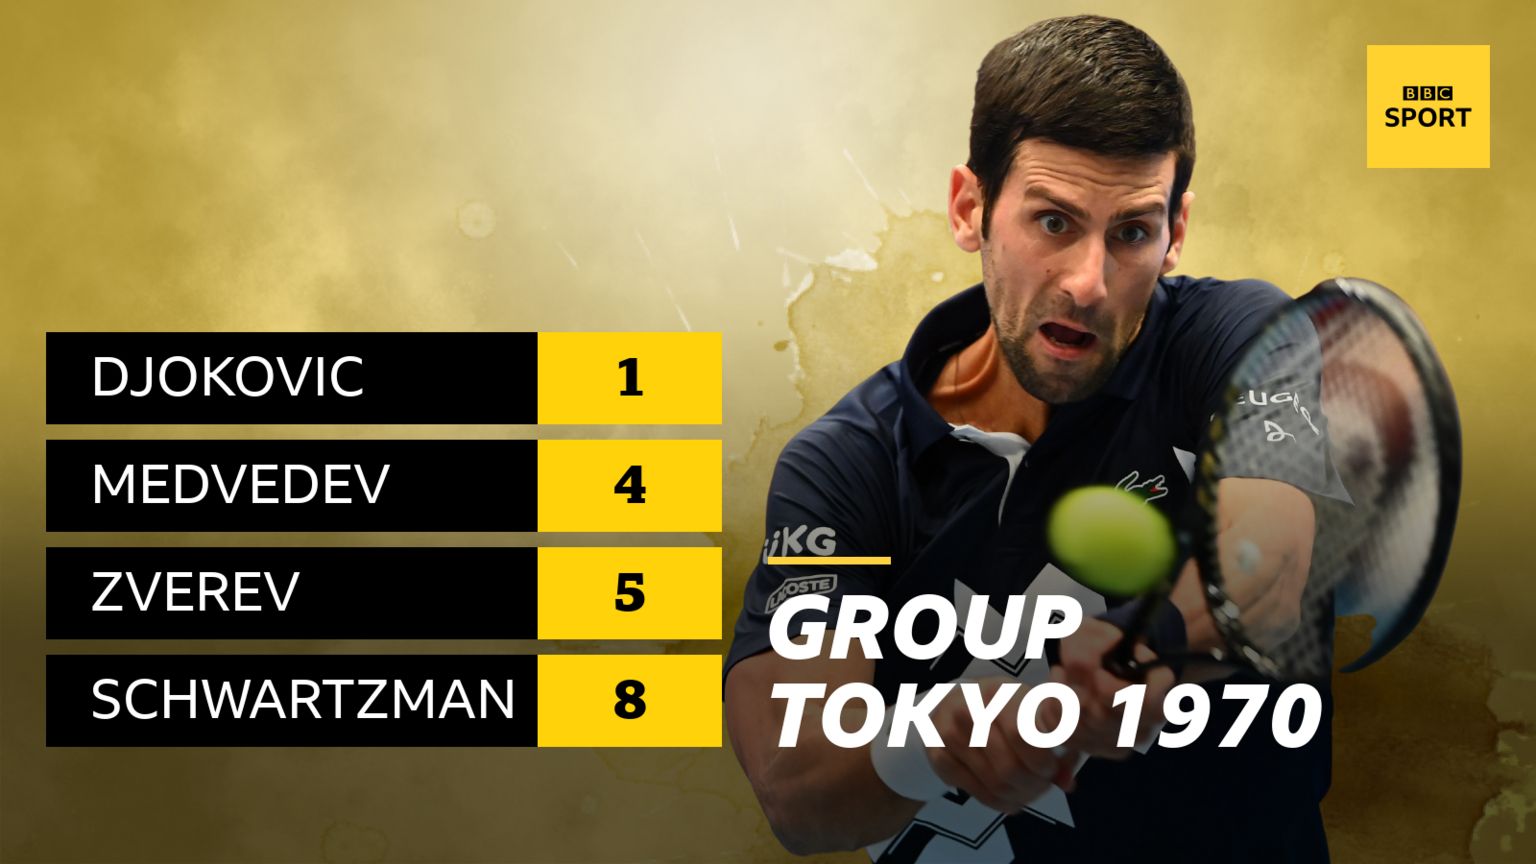 Novak Djokovic is seeded first, Daniil Medvedev is seeded fourth, Alexander Zverev is seeded fifth and Diego Schwartzman is seeded eighth